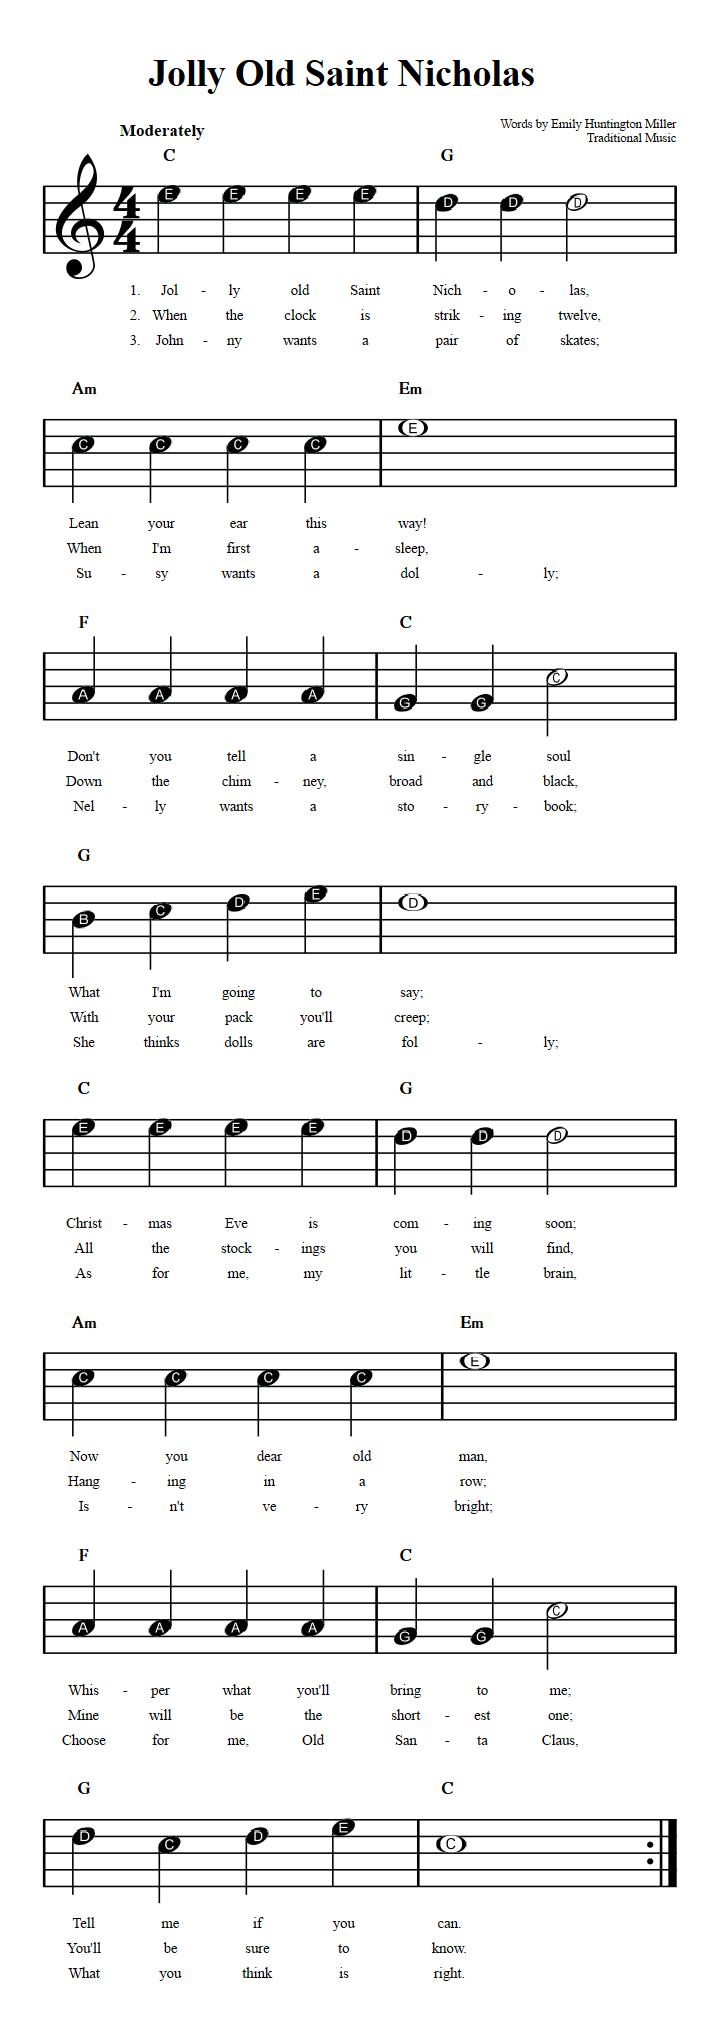 Jolly Old Saint Nicholas: Beginner Sheet Music with Chords and Lyrics